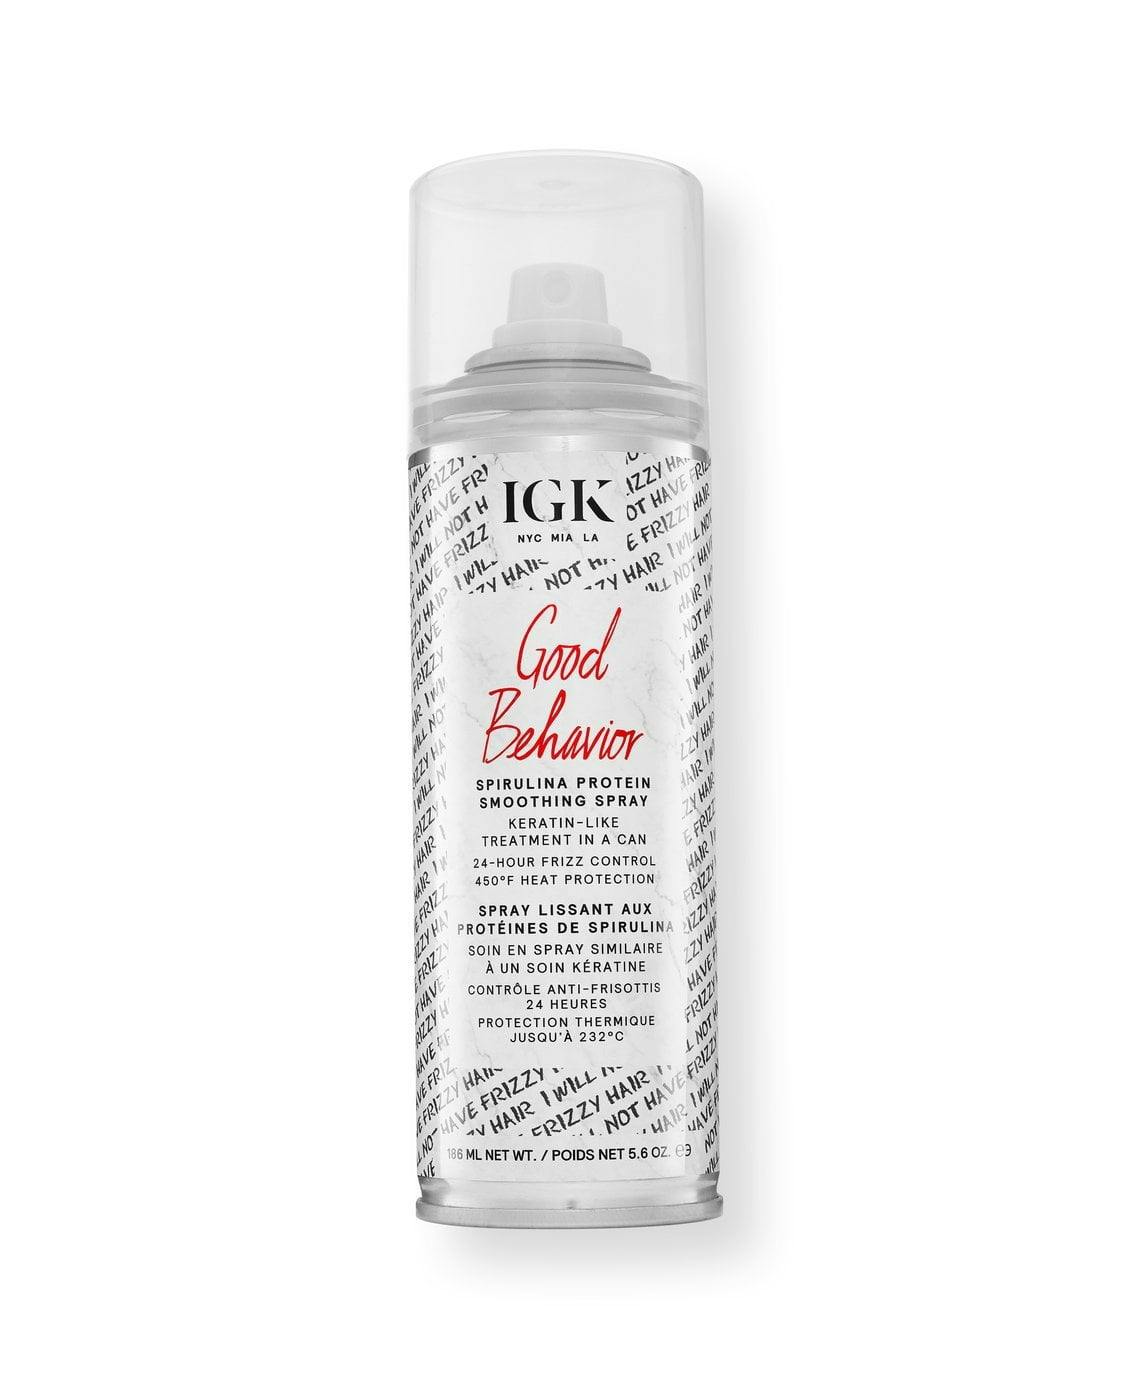 IGK Good Behaviour Spirulina Protein Smoothing Spray 186ml